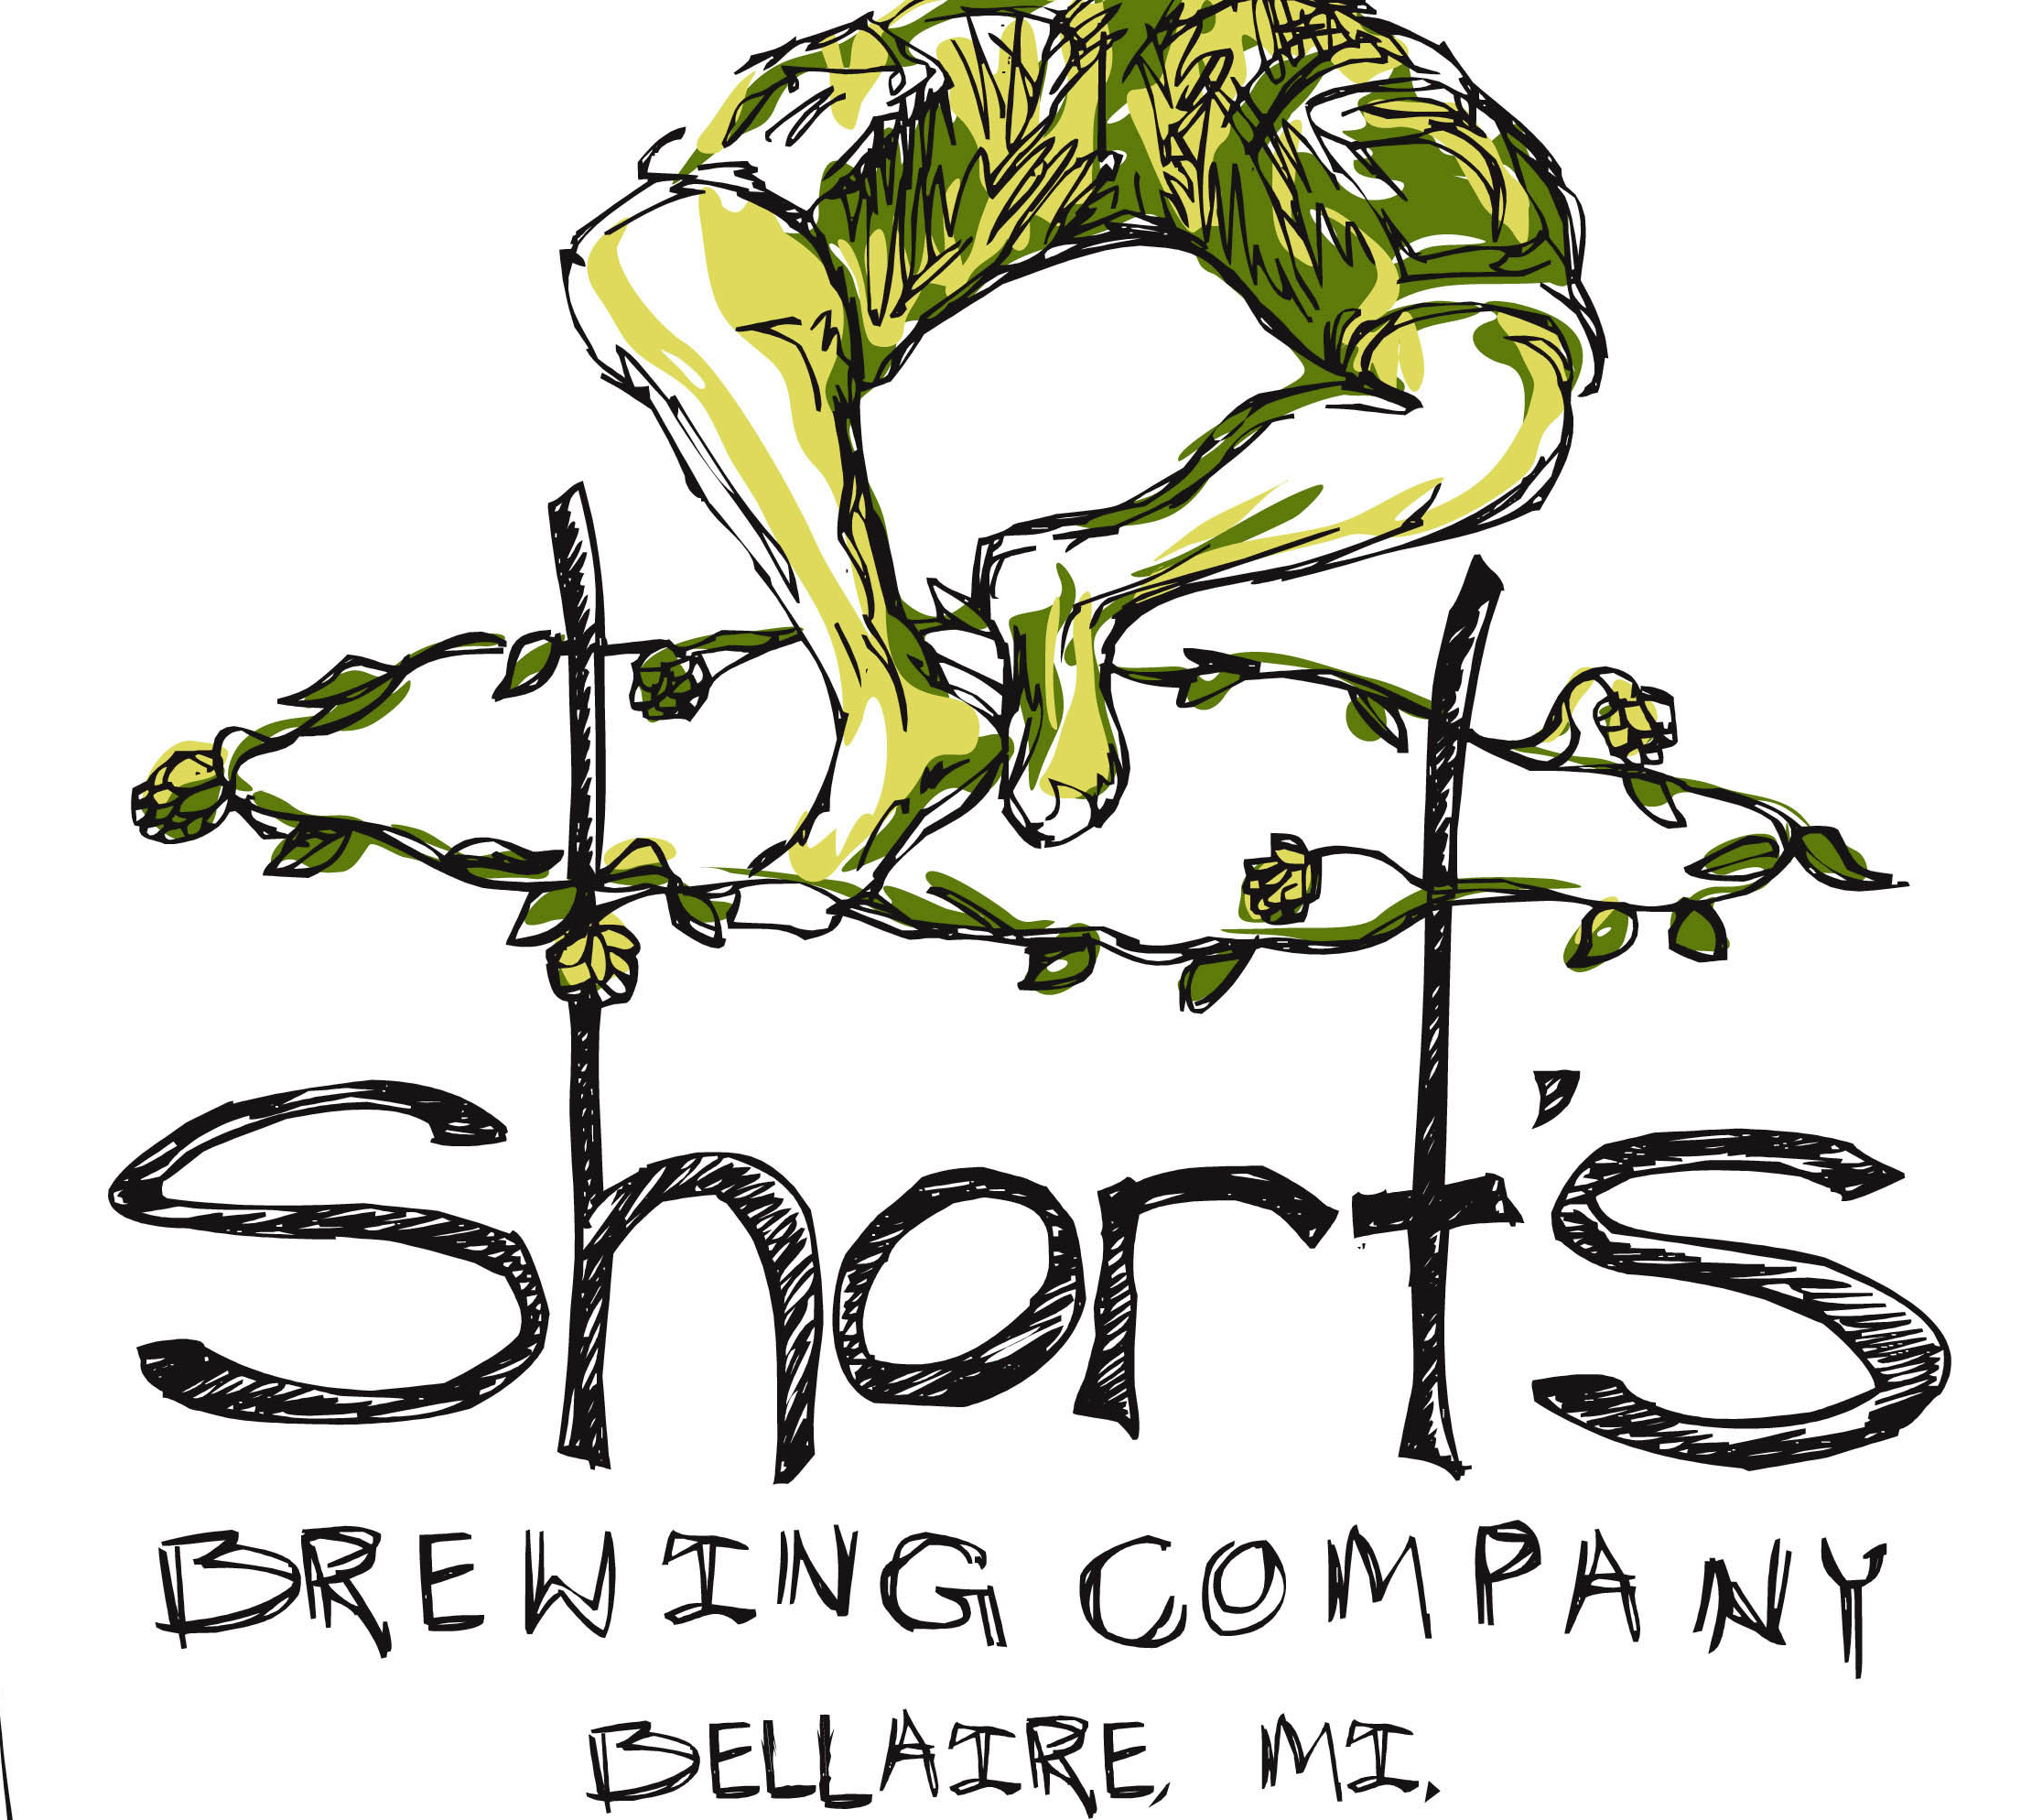 Shorts brewing company